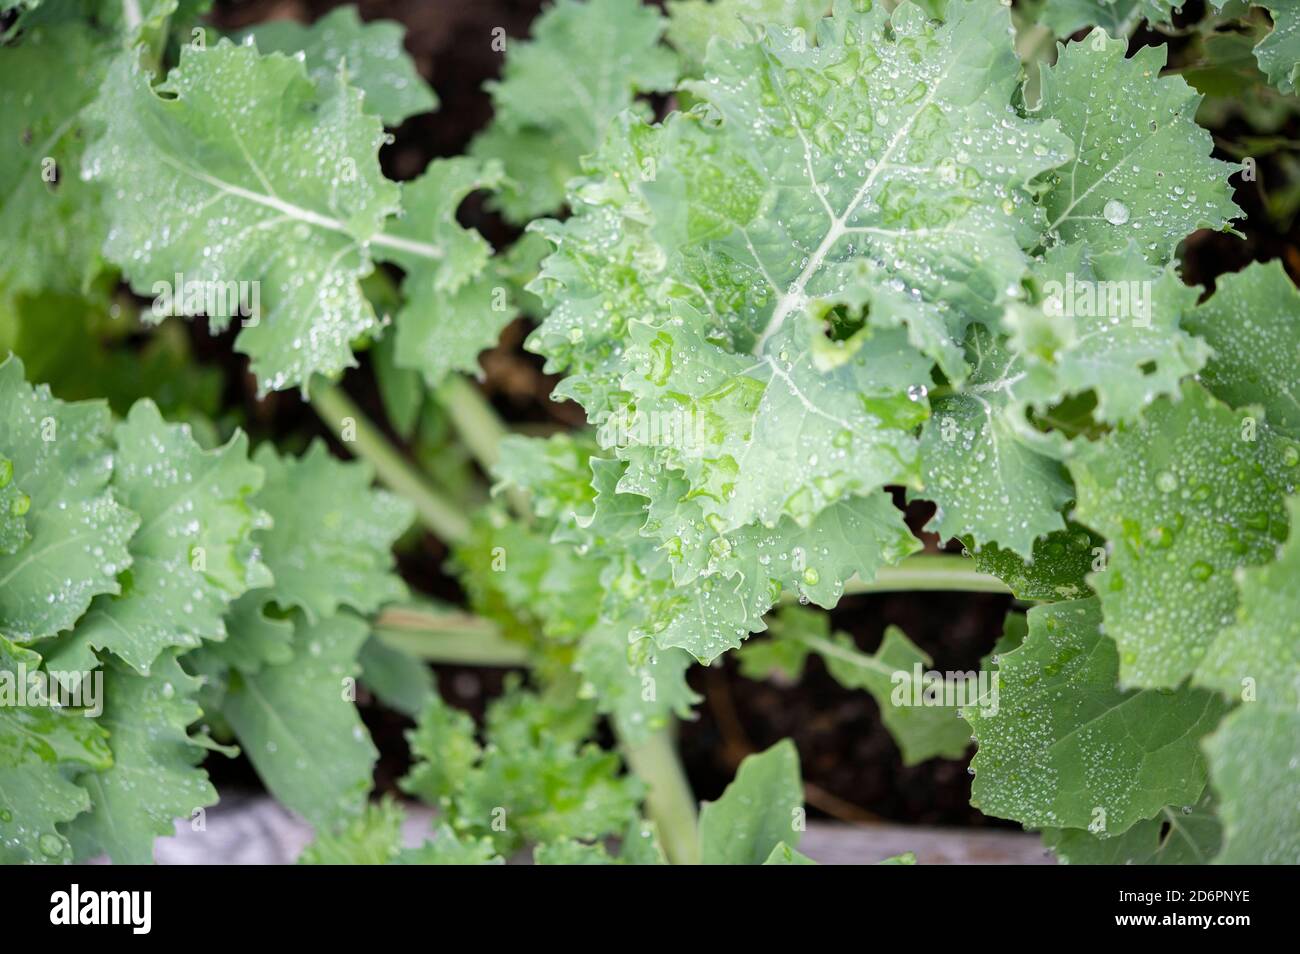 kale growing in a garden Stock Photo